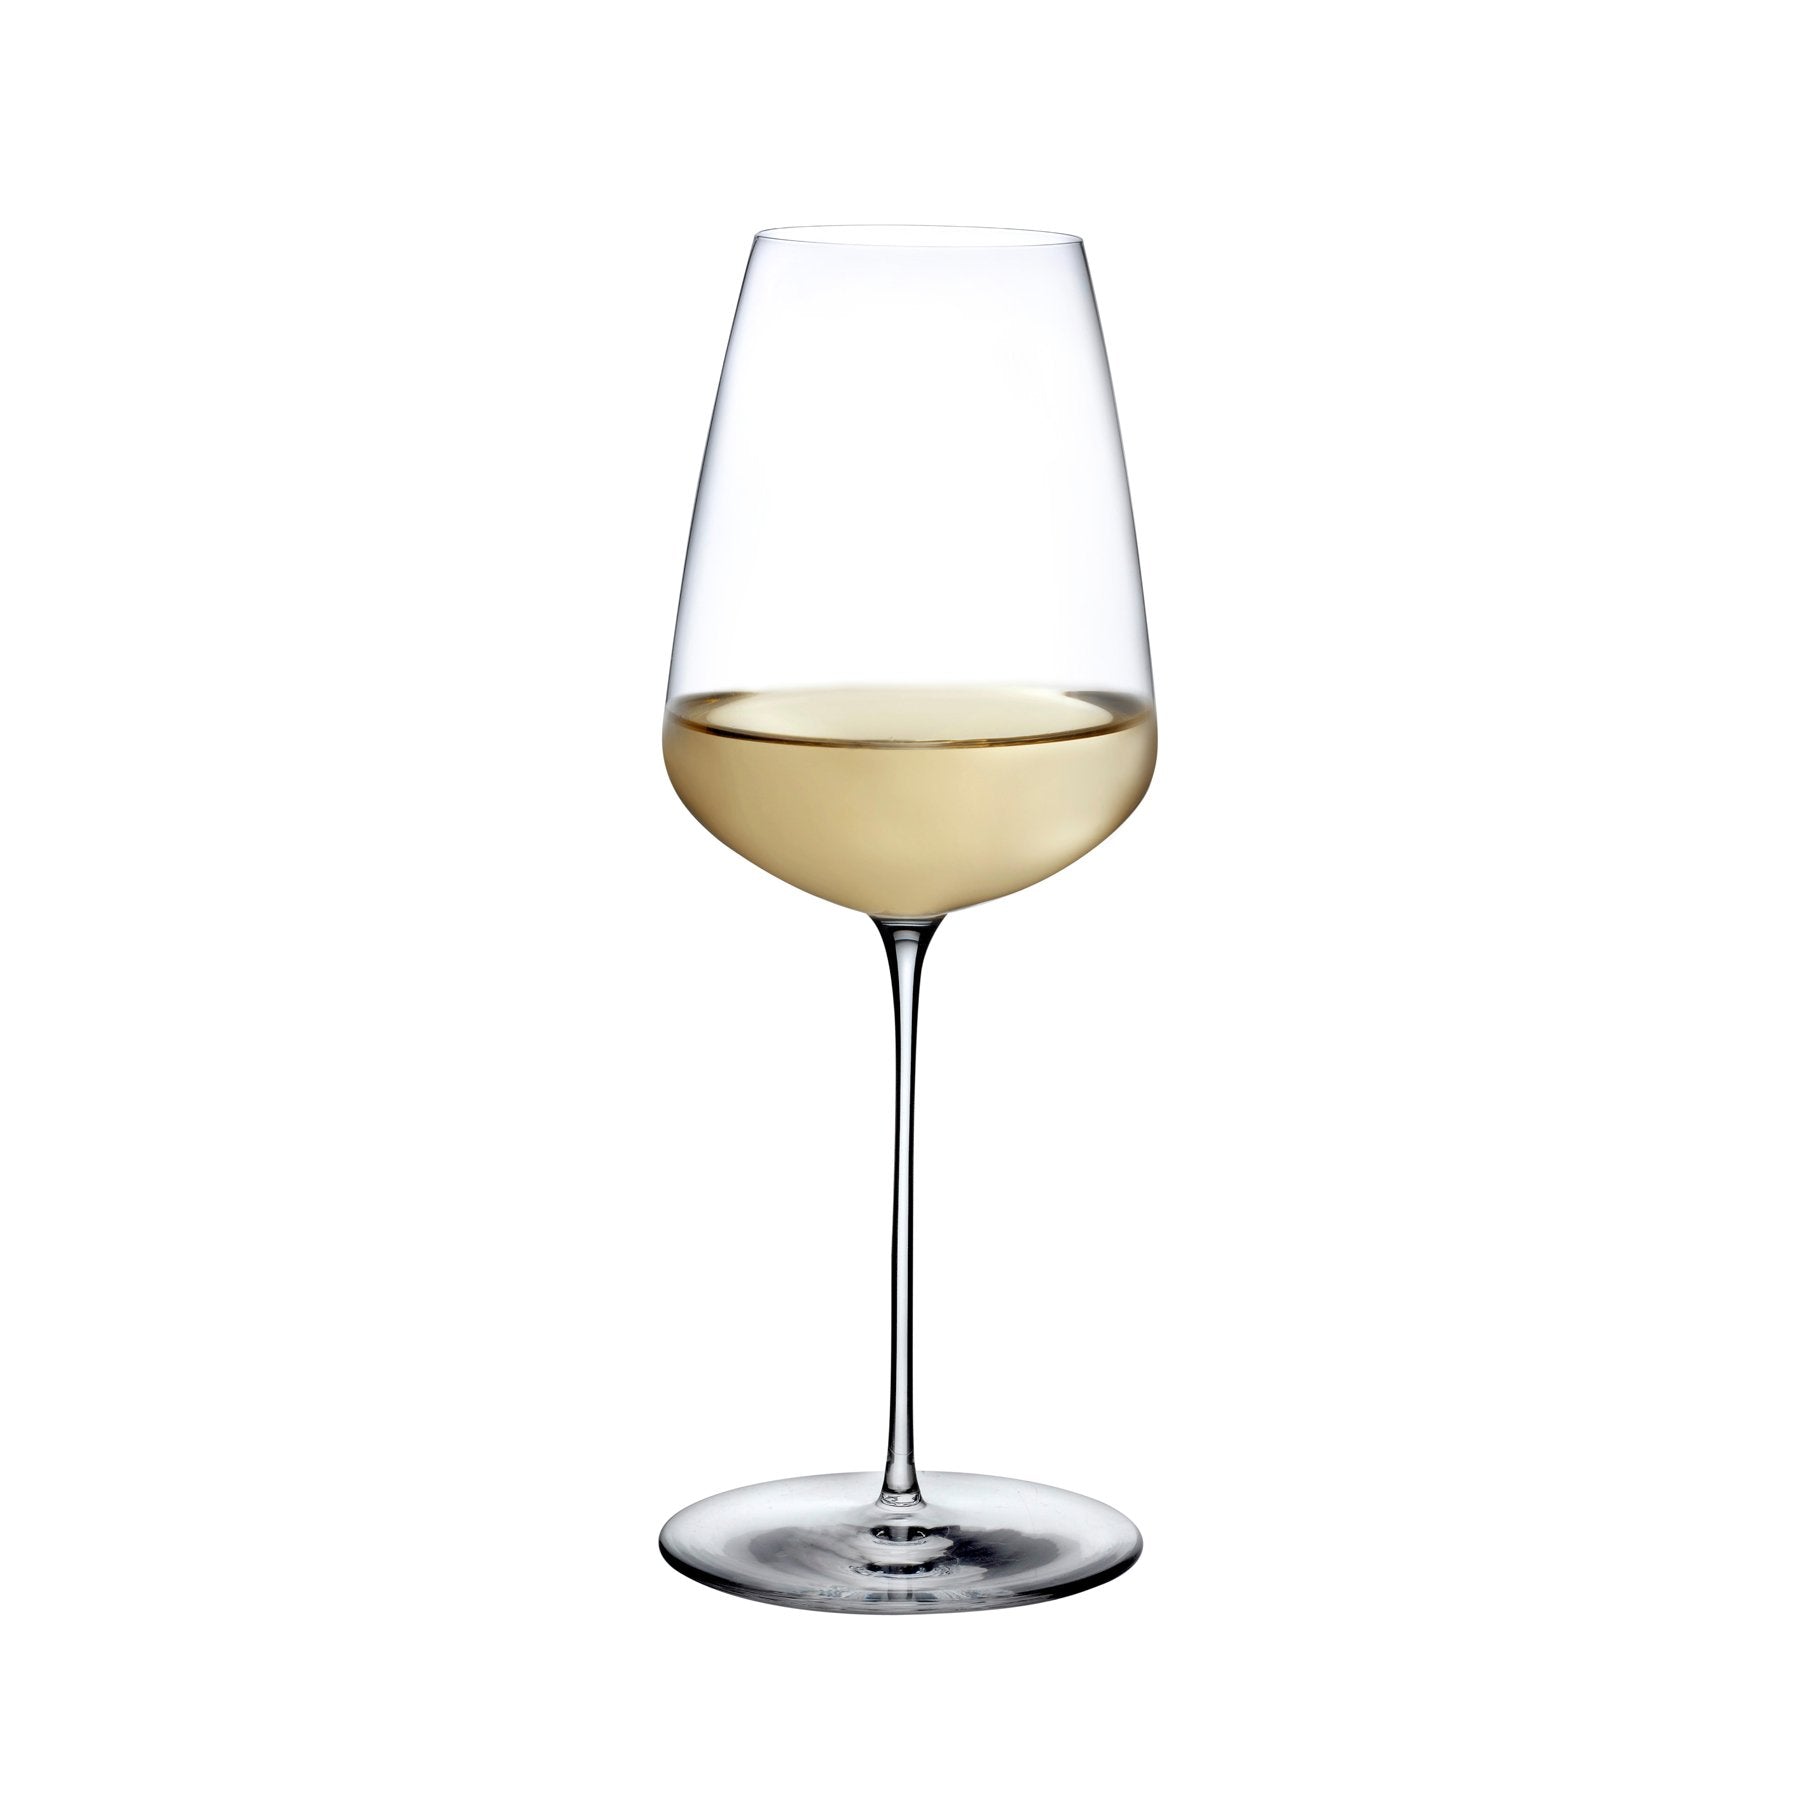  Nude Stem Zero Elegant Burgundy Wine Large Glasses 32.25 oz,  Crystal Clear Wine Glass,, Lead - Free